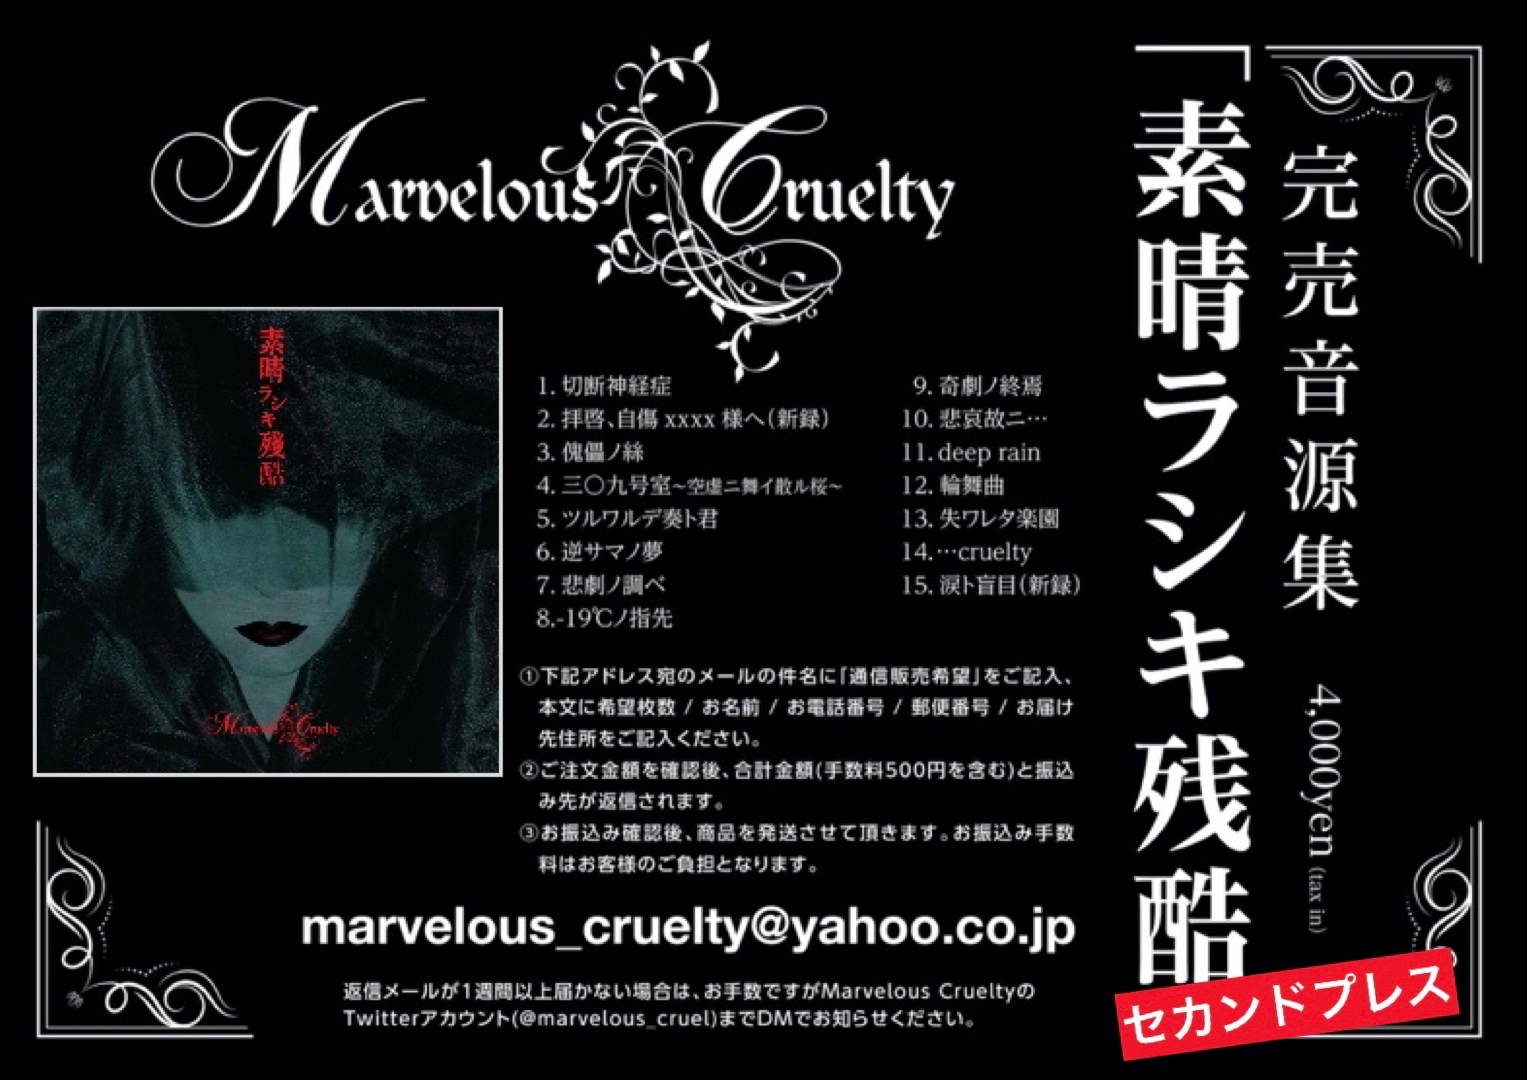 Marvelous Cruelty will suspend activities indefinitely + new album 